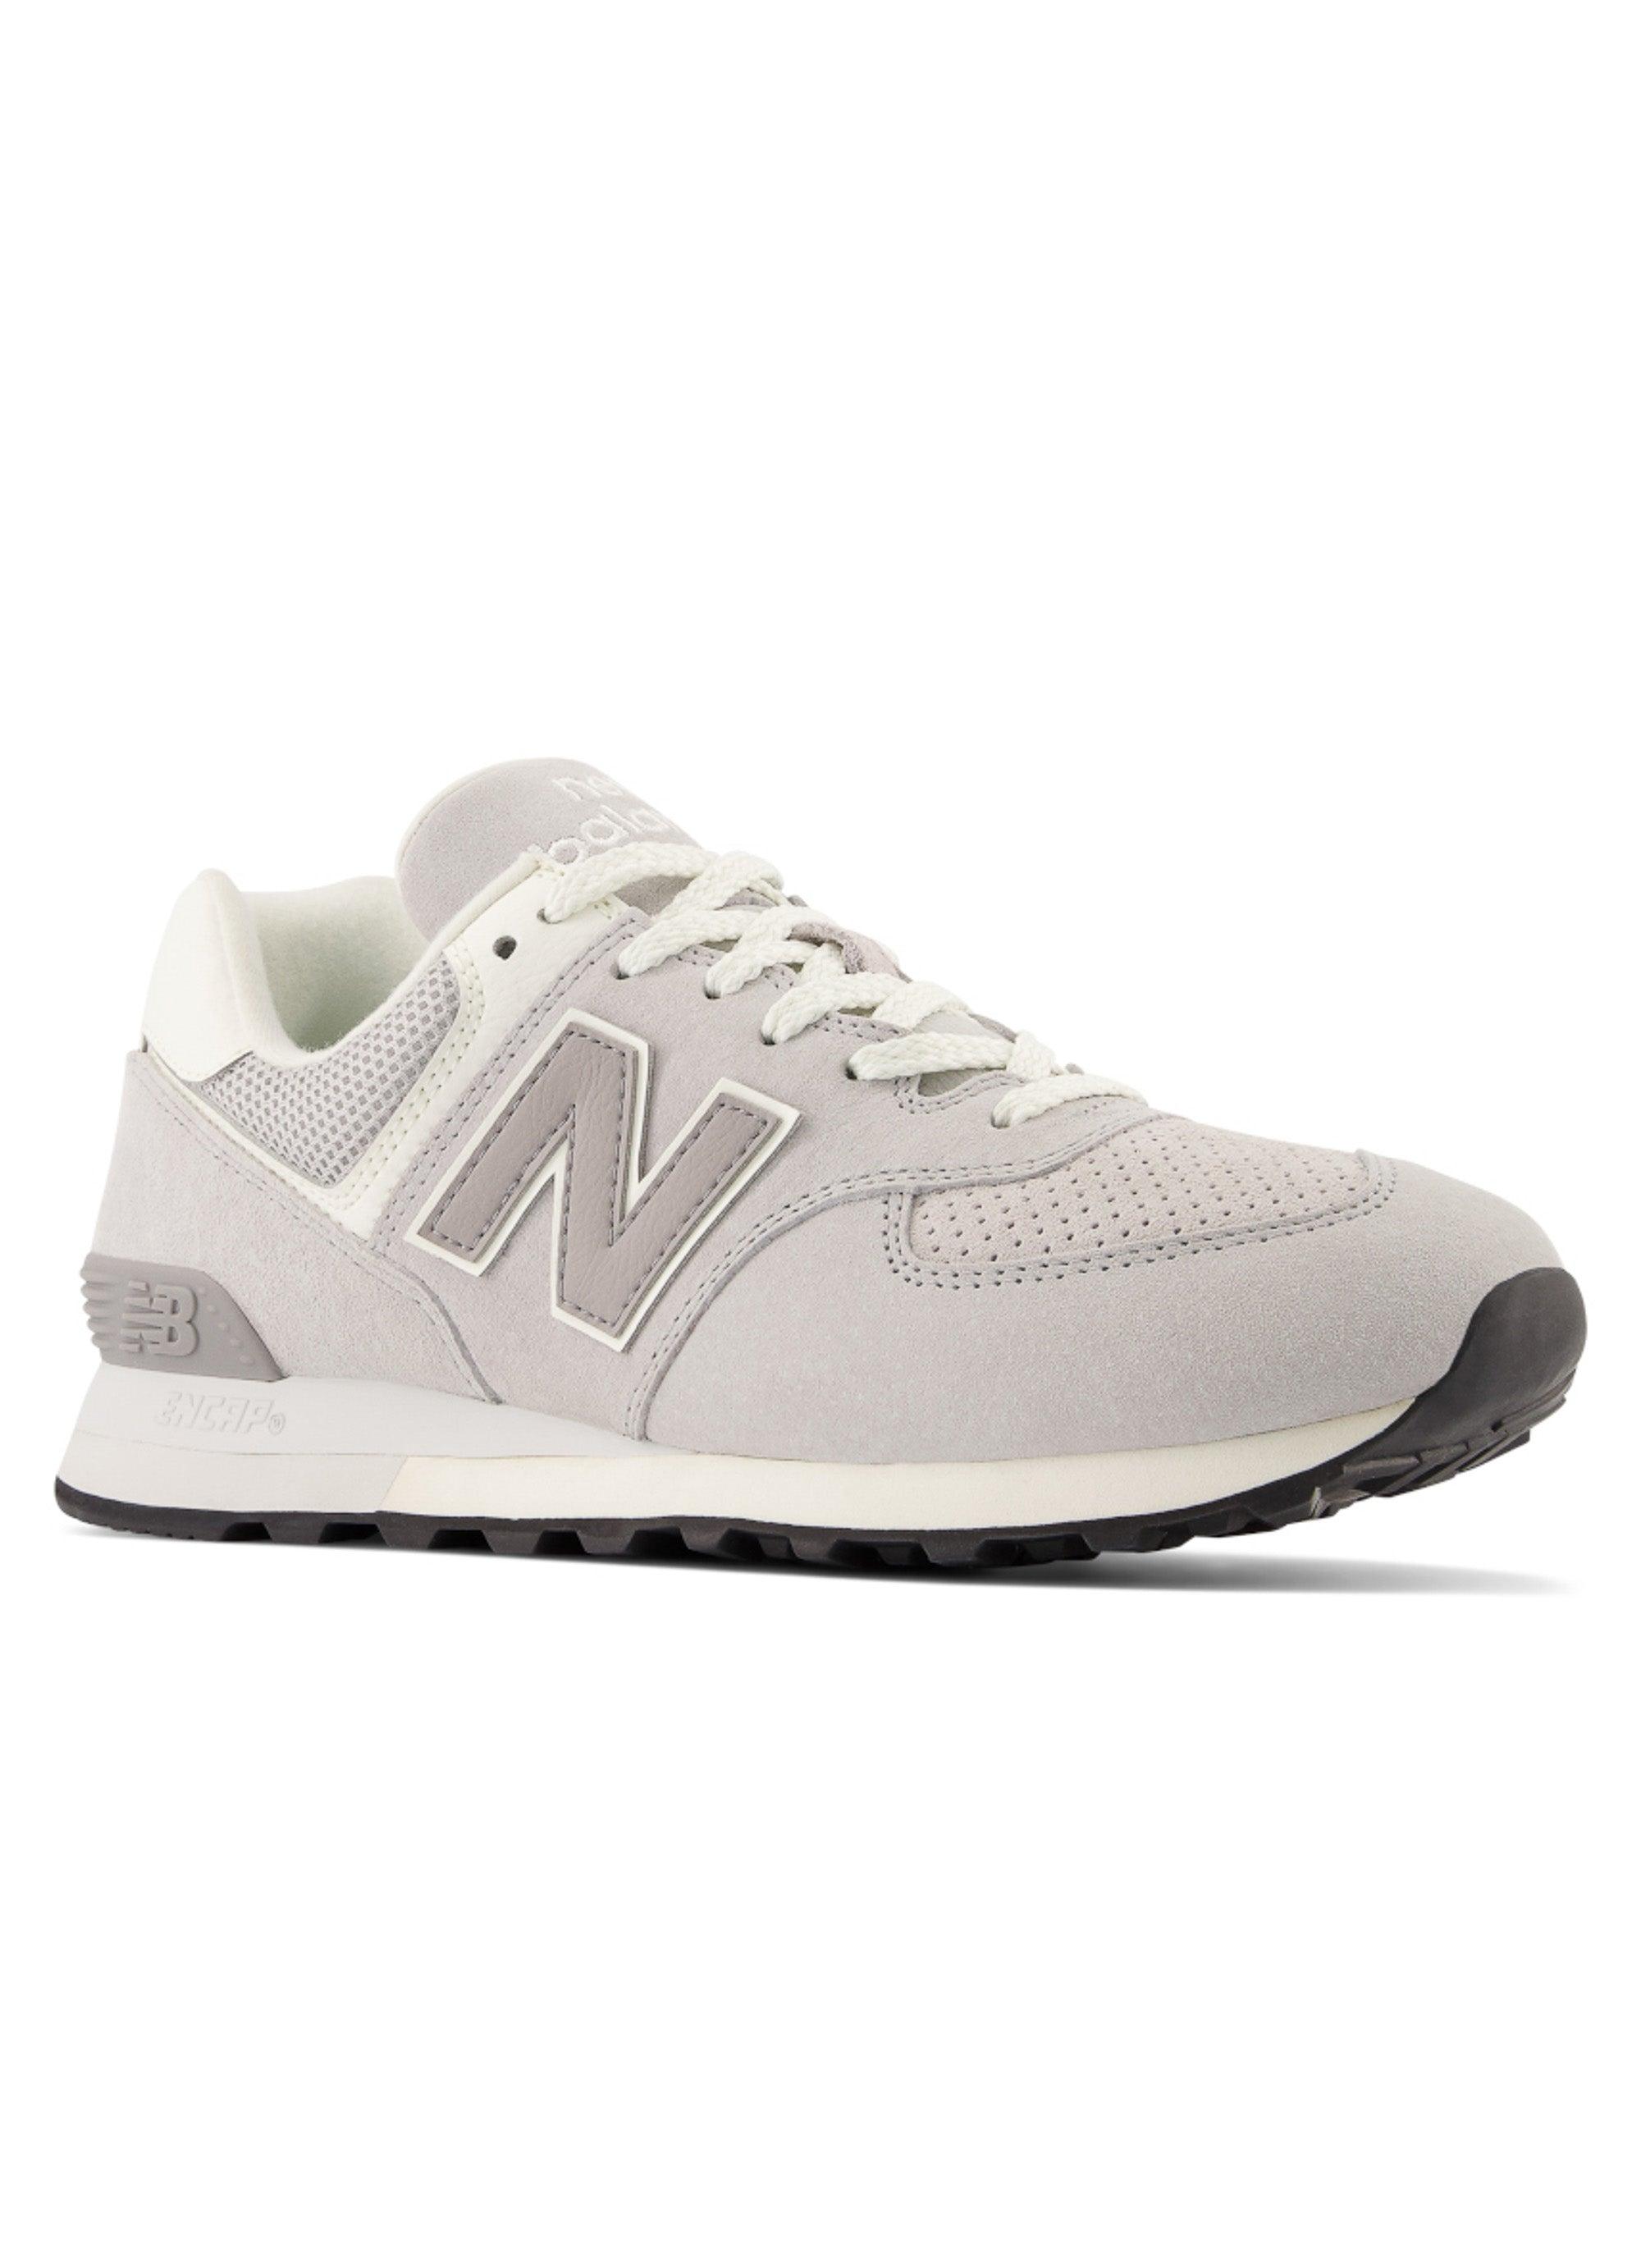 New Balance 574 Sneaker in White | Lyst